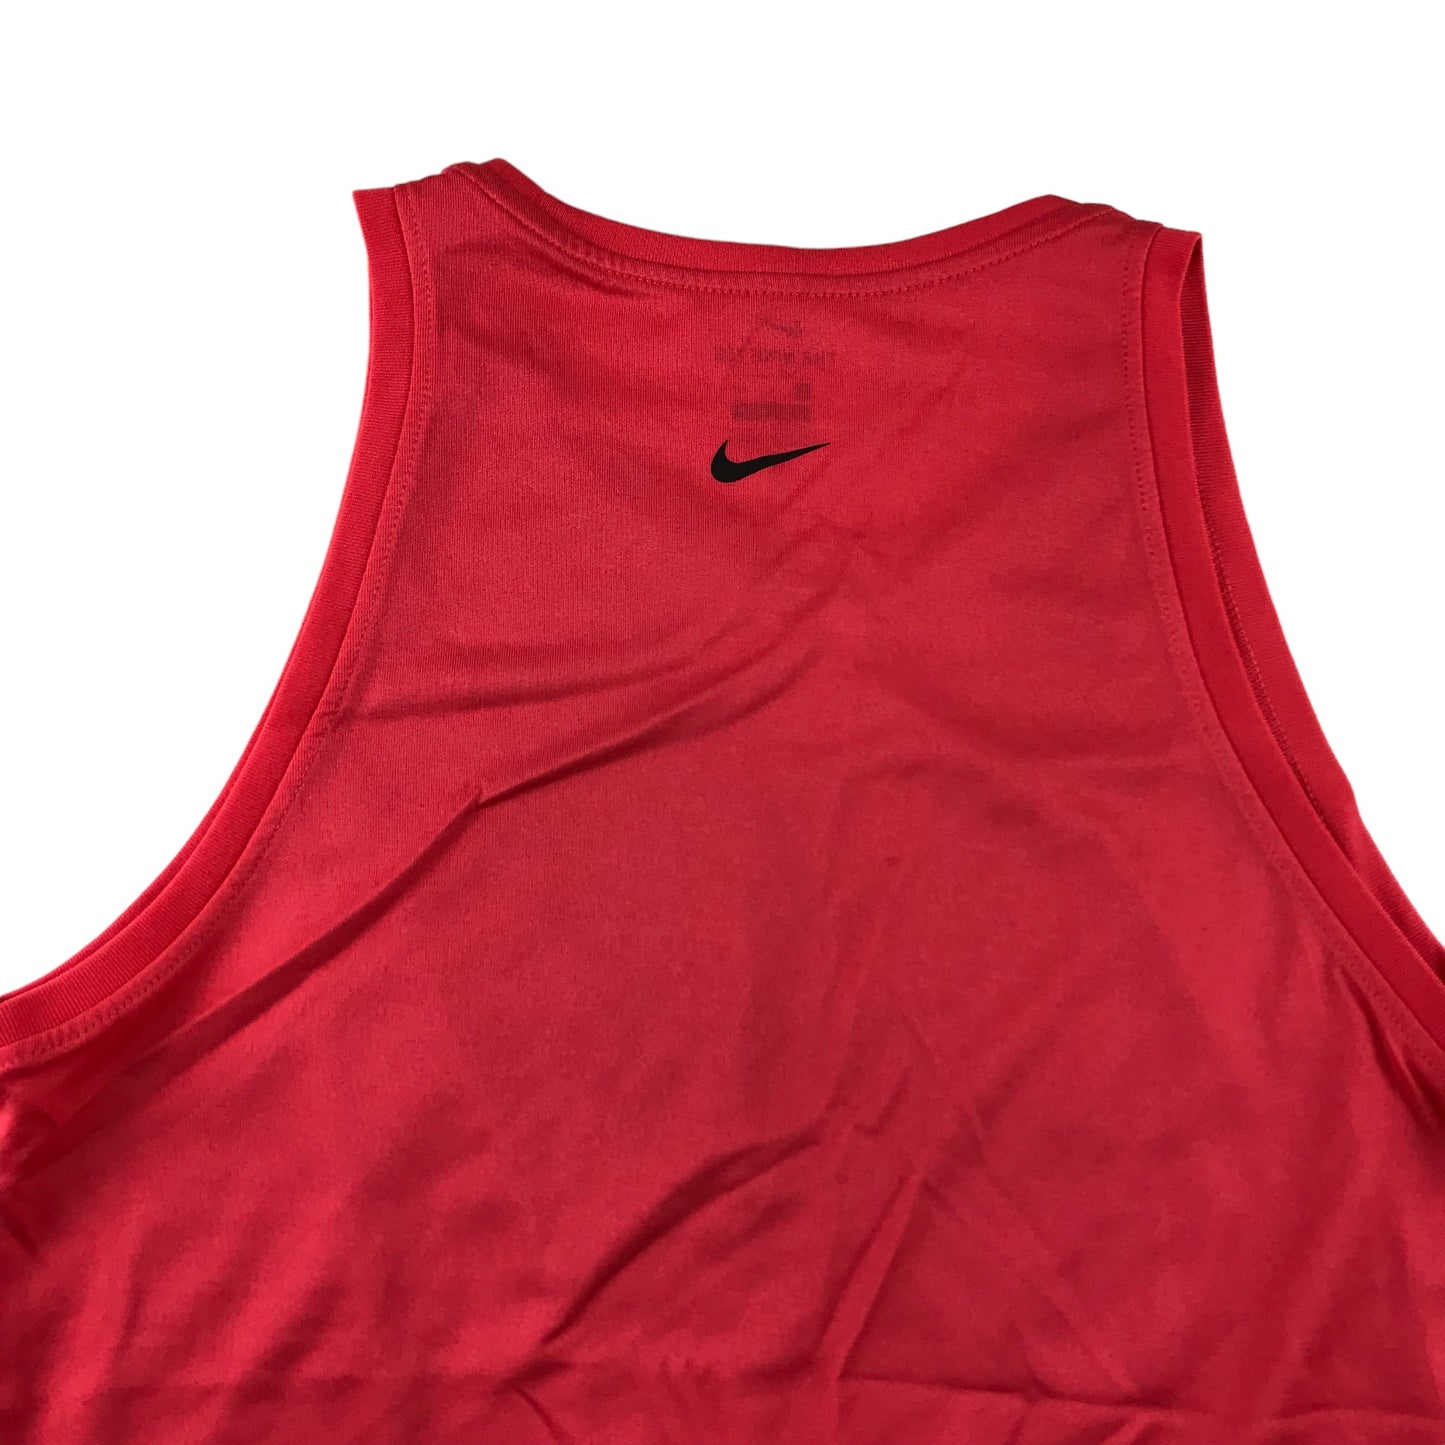 Nike Sports Top Size Women S Red Sporty Vest